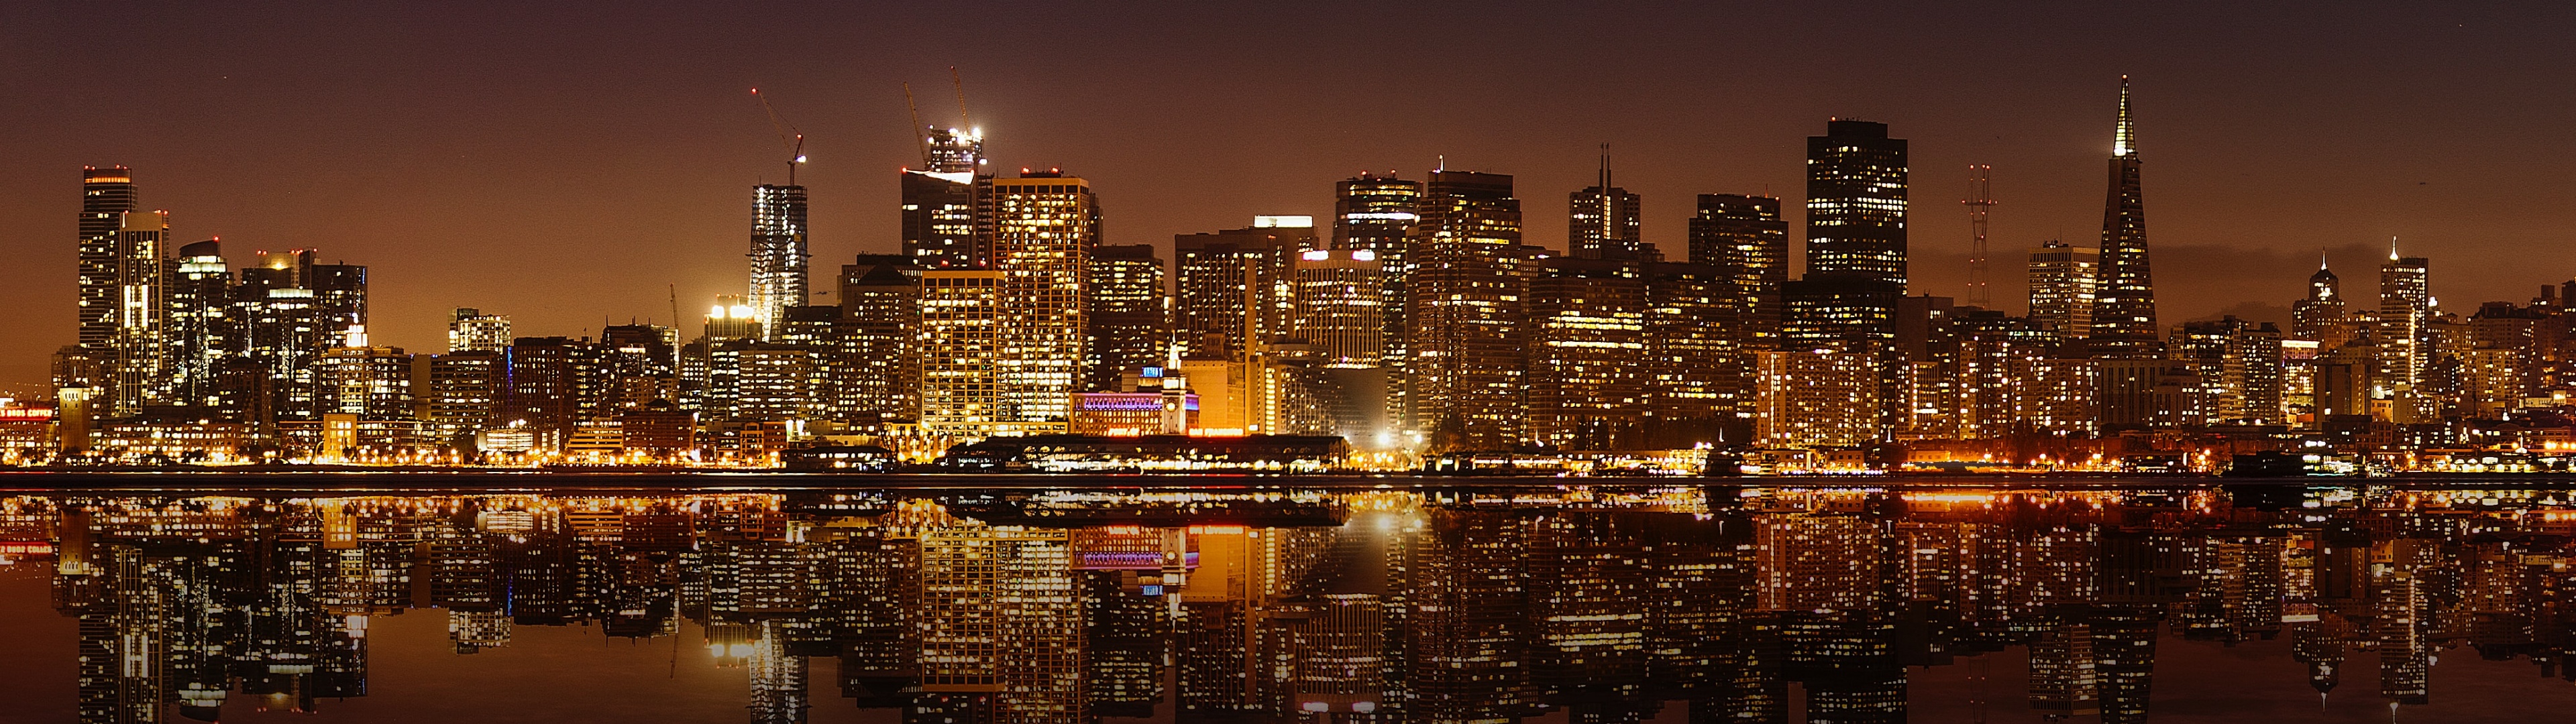 San Francisco City Wallpaper 4k Skyline United States Night Time Cityscape World 5005